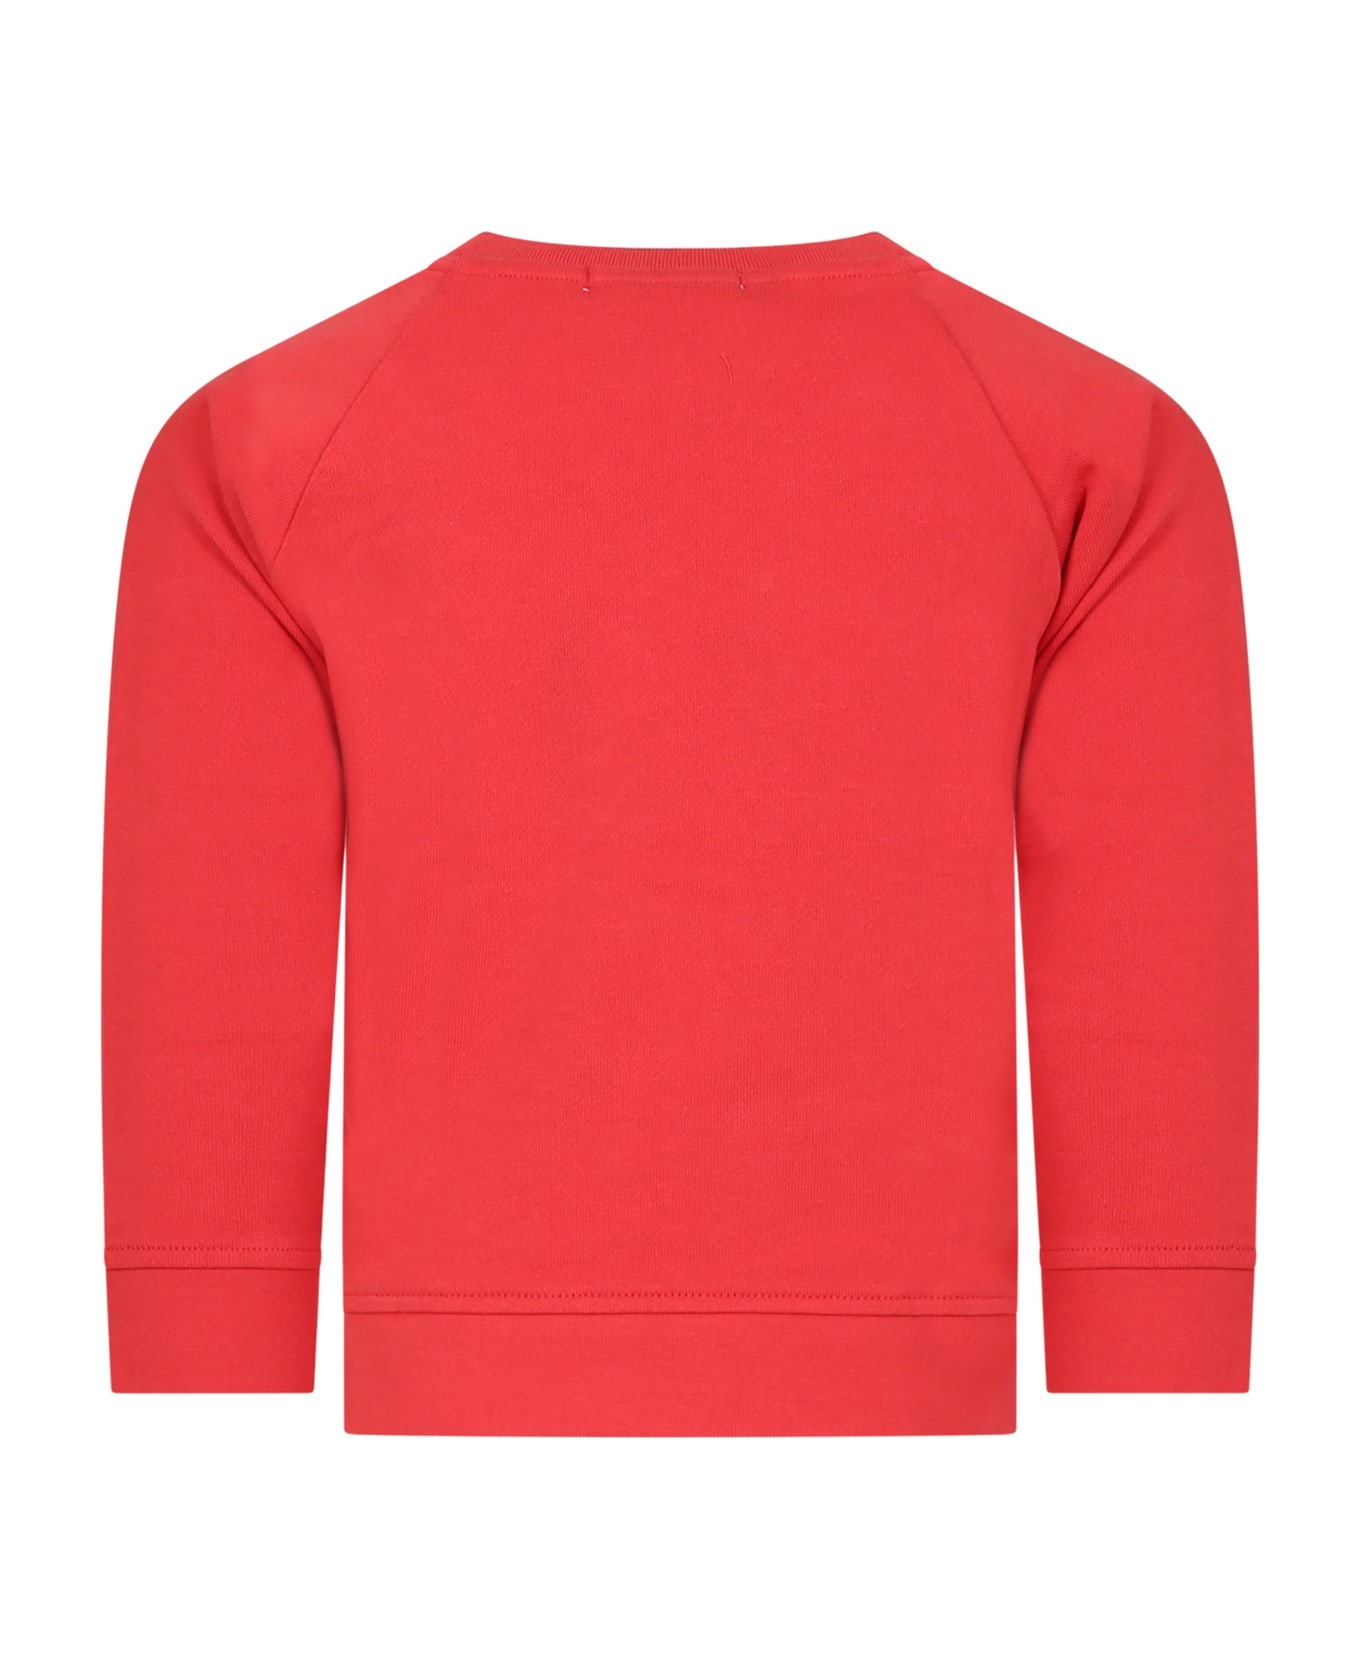 Stella McCartney Kids Red Sweatshirt For Kids With Print - Red